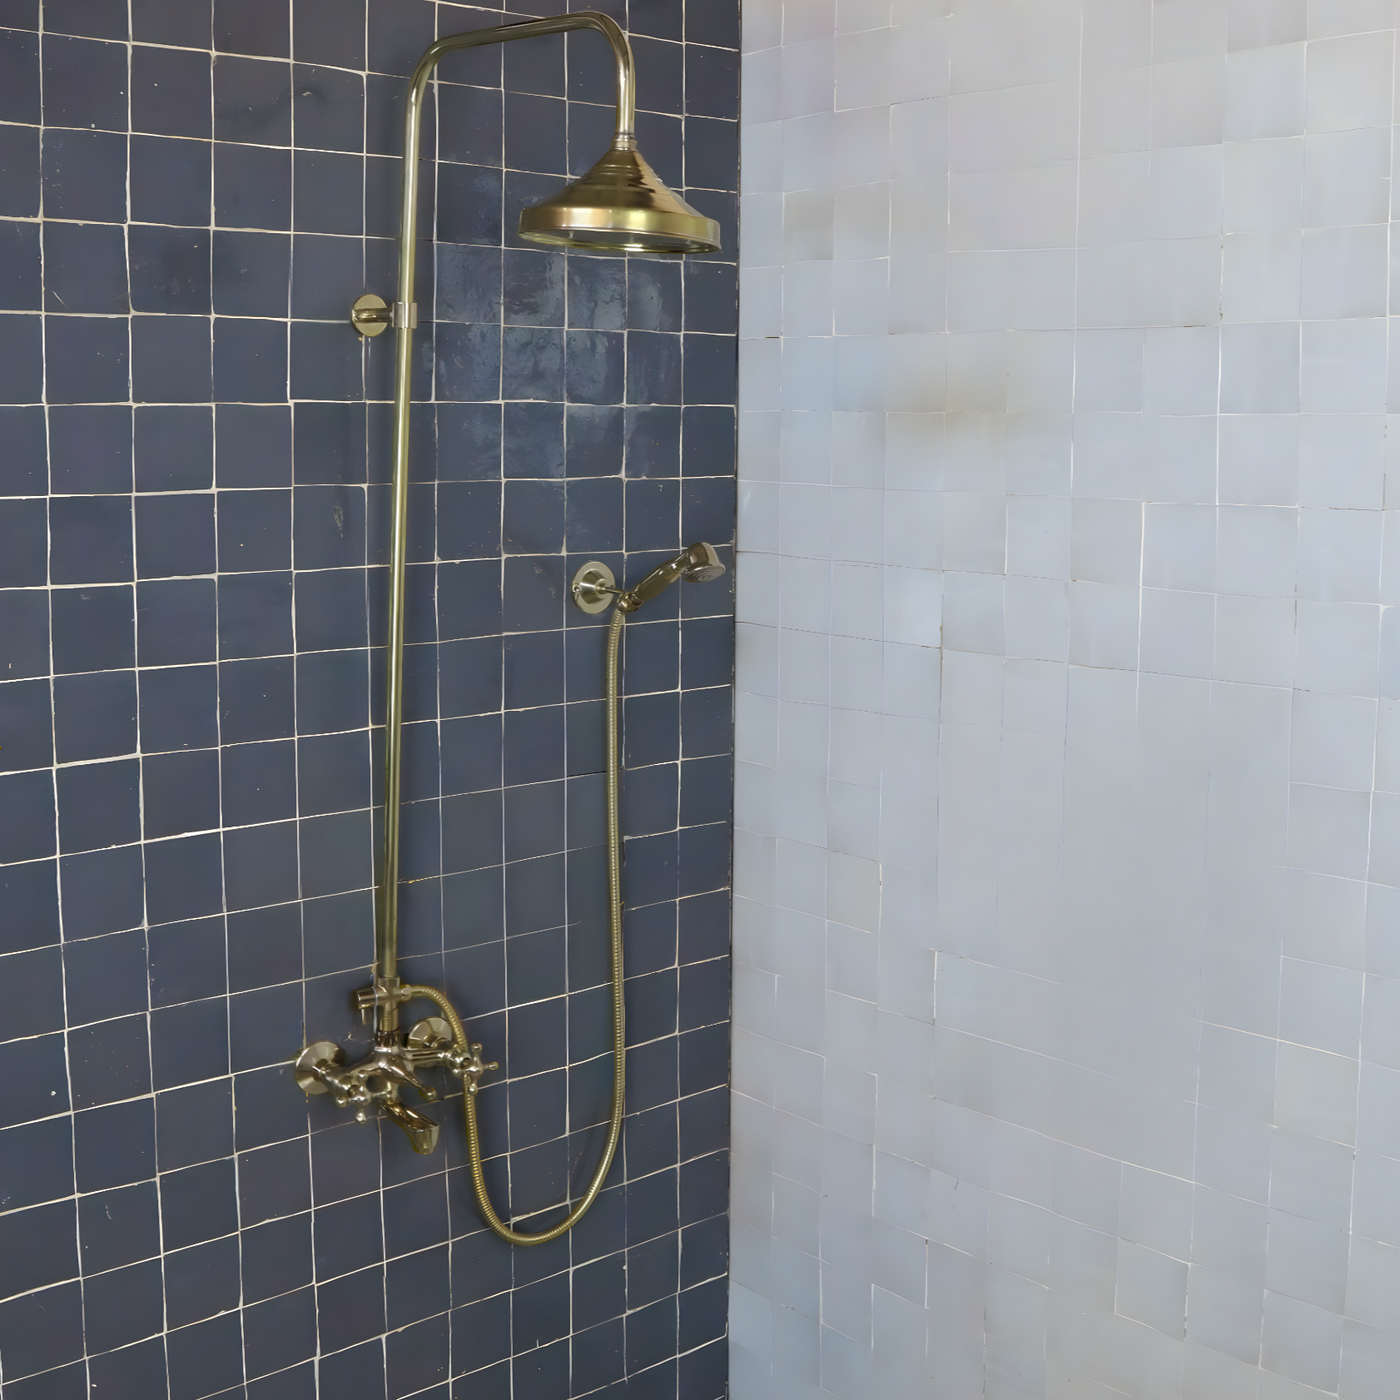 Shower Set With tub filler - Triazadesigns